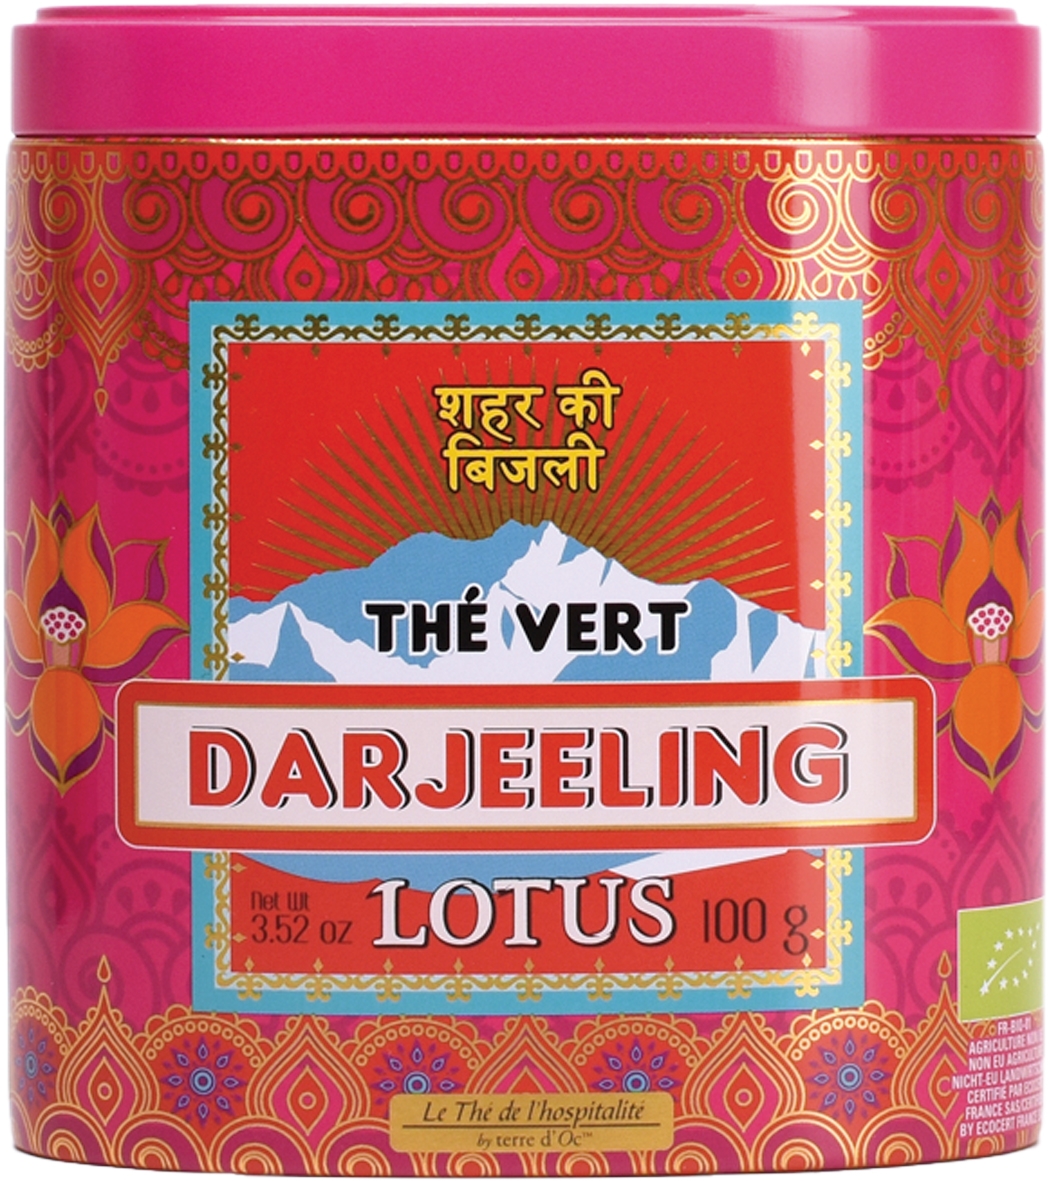 Green Tea "Darjeeling" Lotus - Organic 